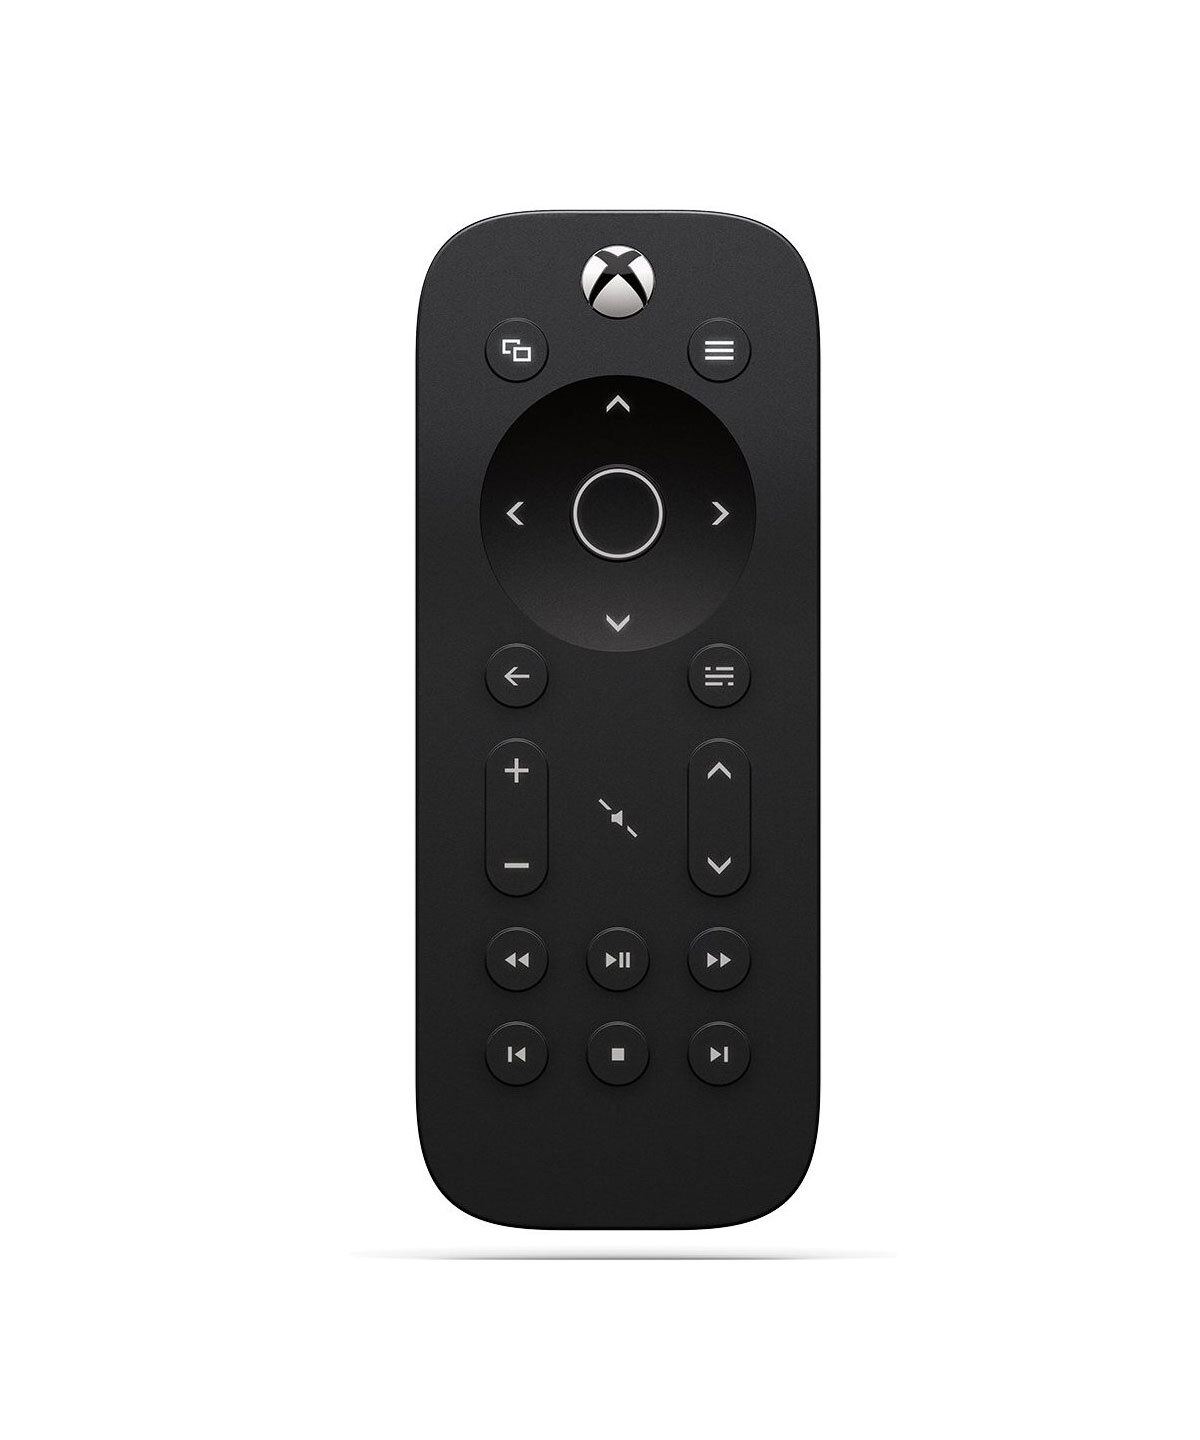 Điều khiển từ xa cho máy chơi game Xbox One Media Remote